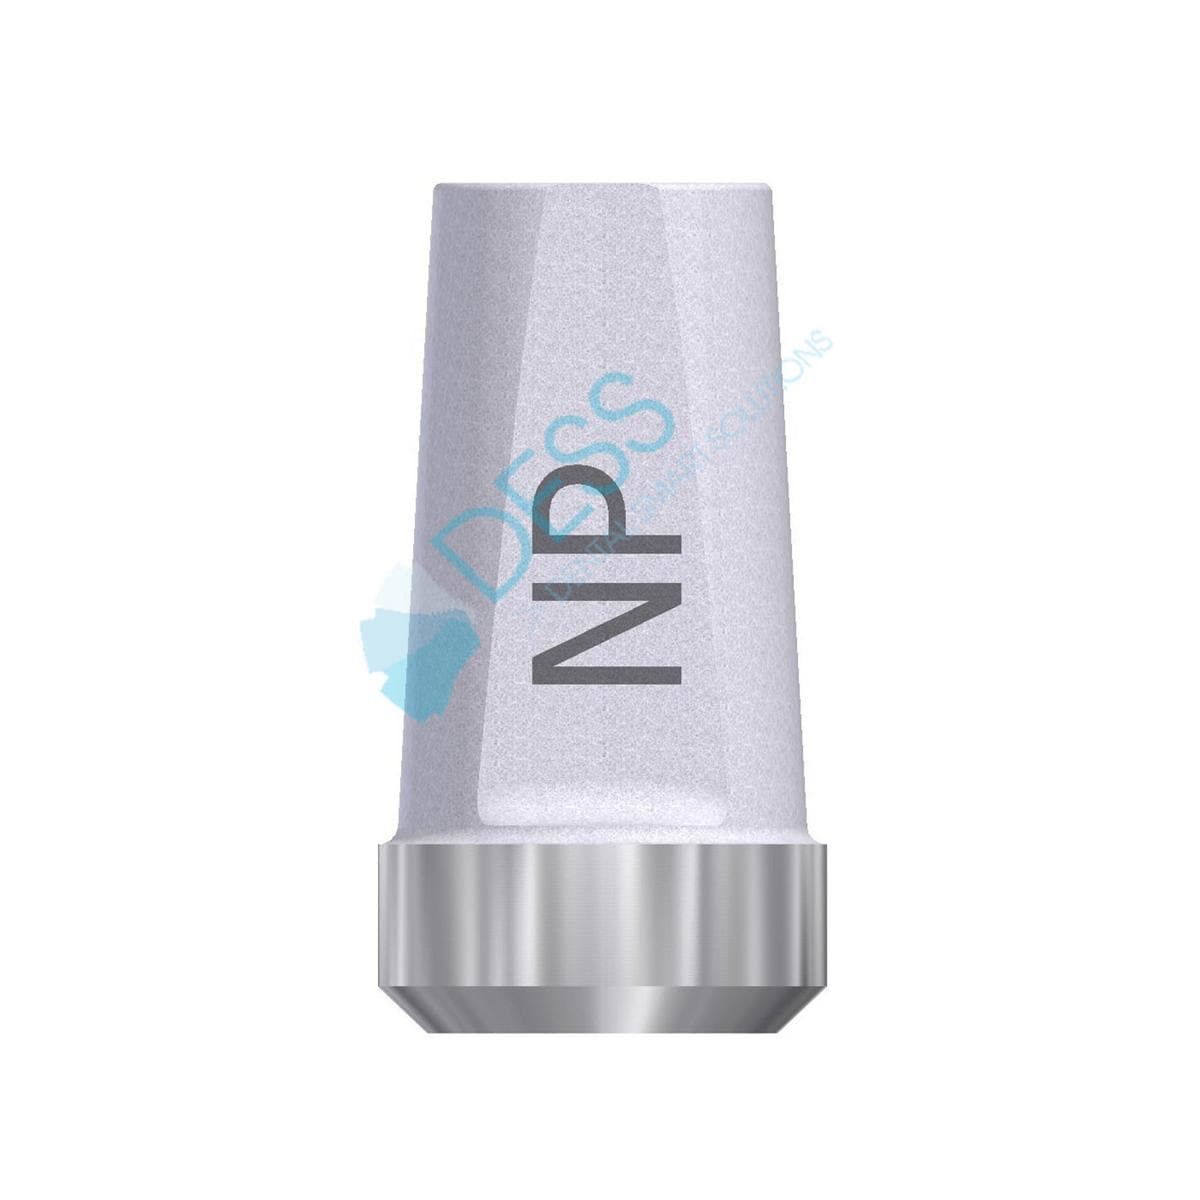 Titanabutment - kompatibel mit Nobel Branemark® - NP Ø 3,5 mm, 0° gewinkelt